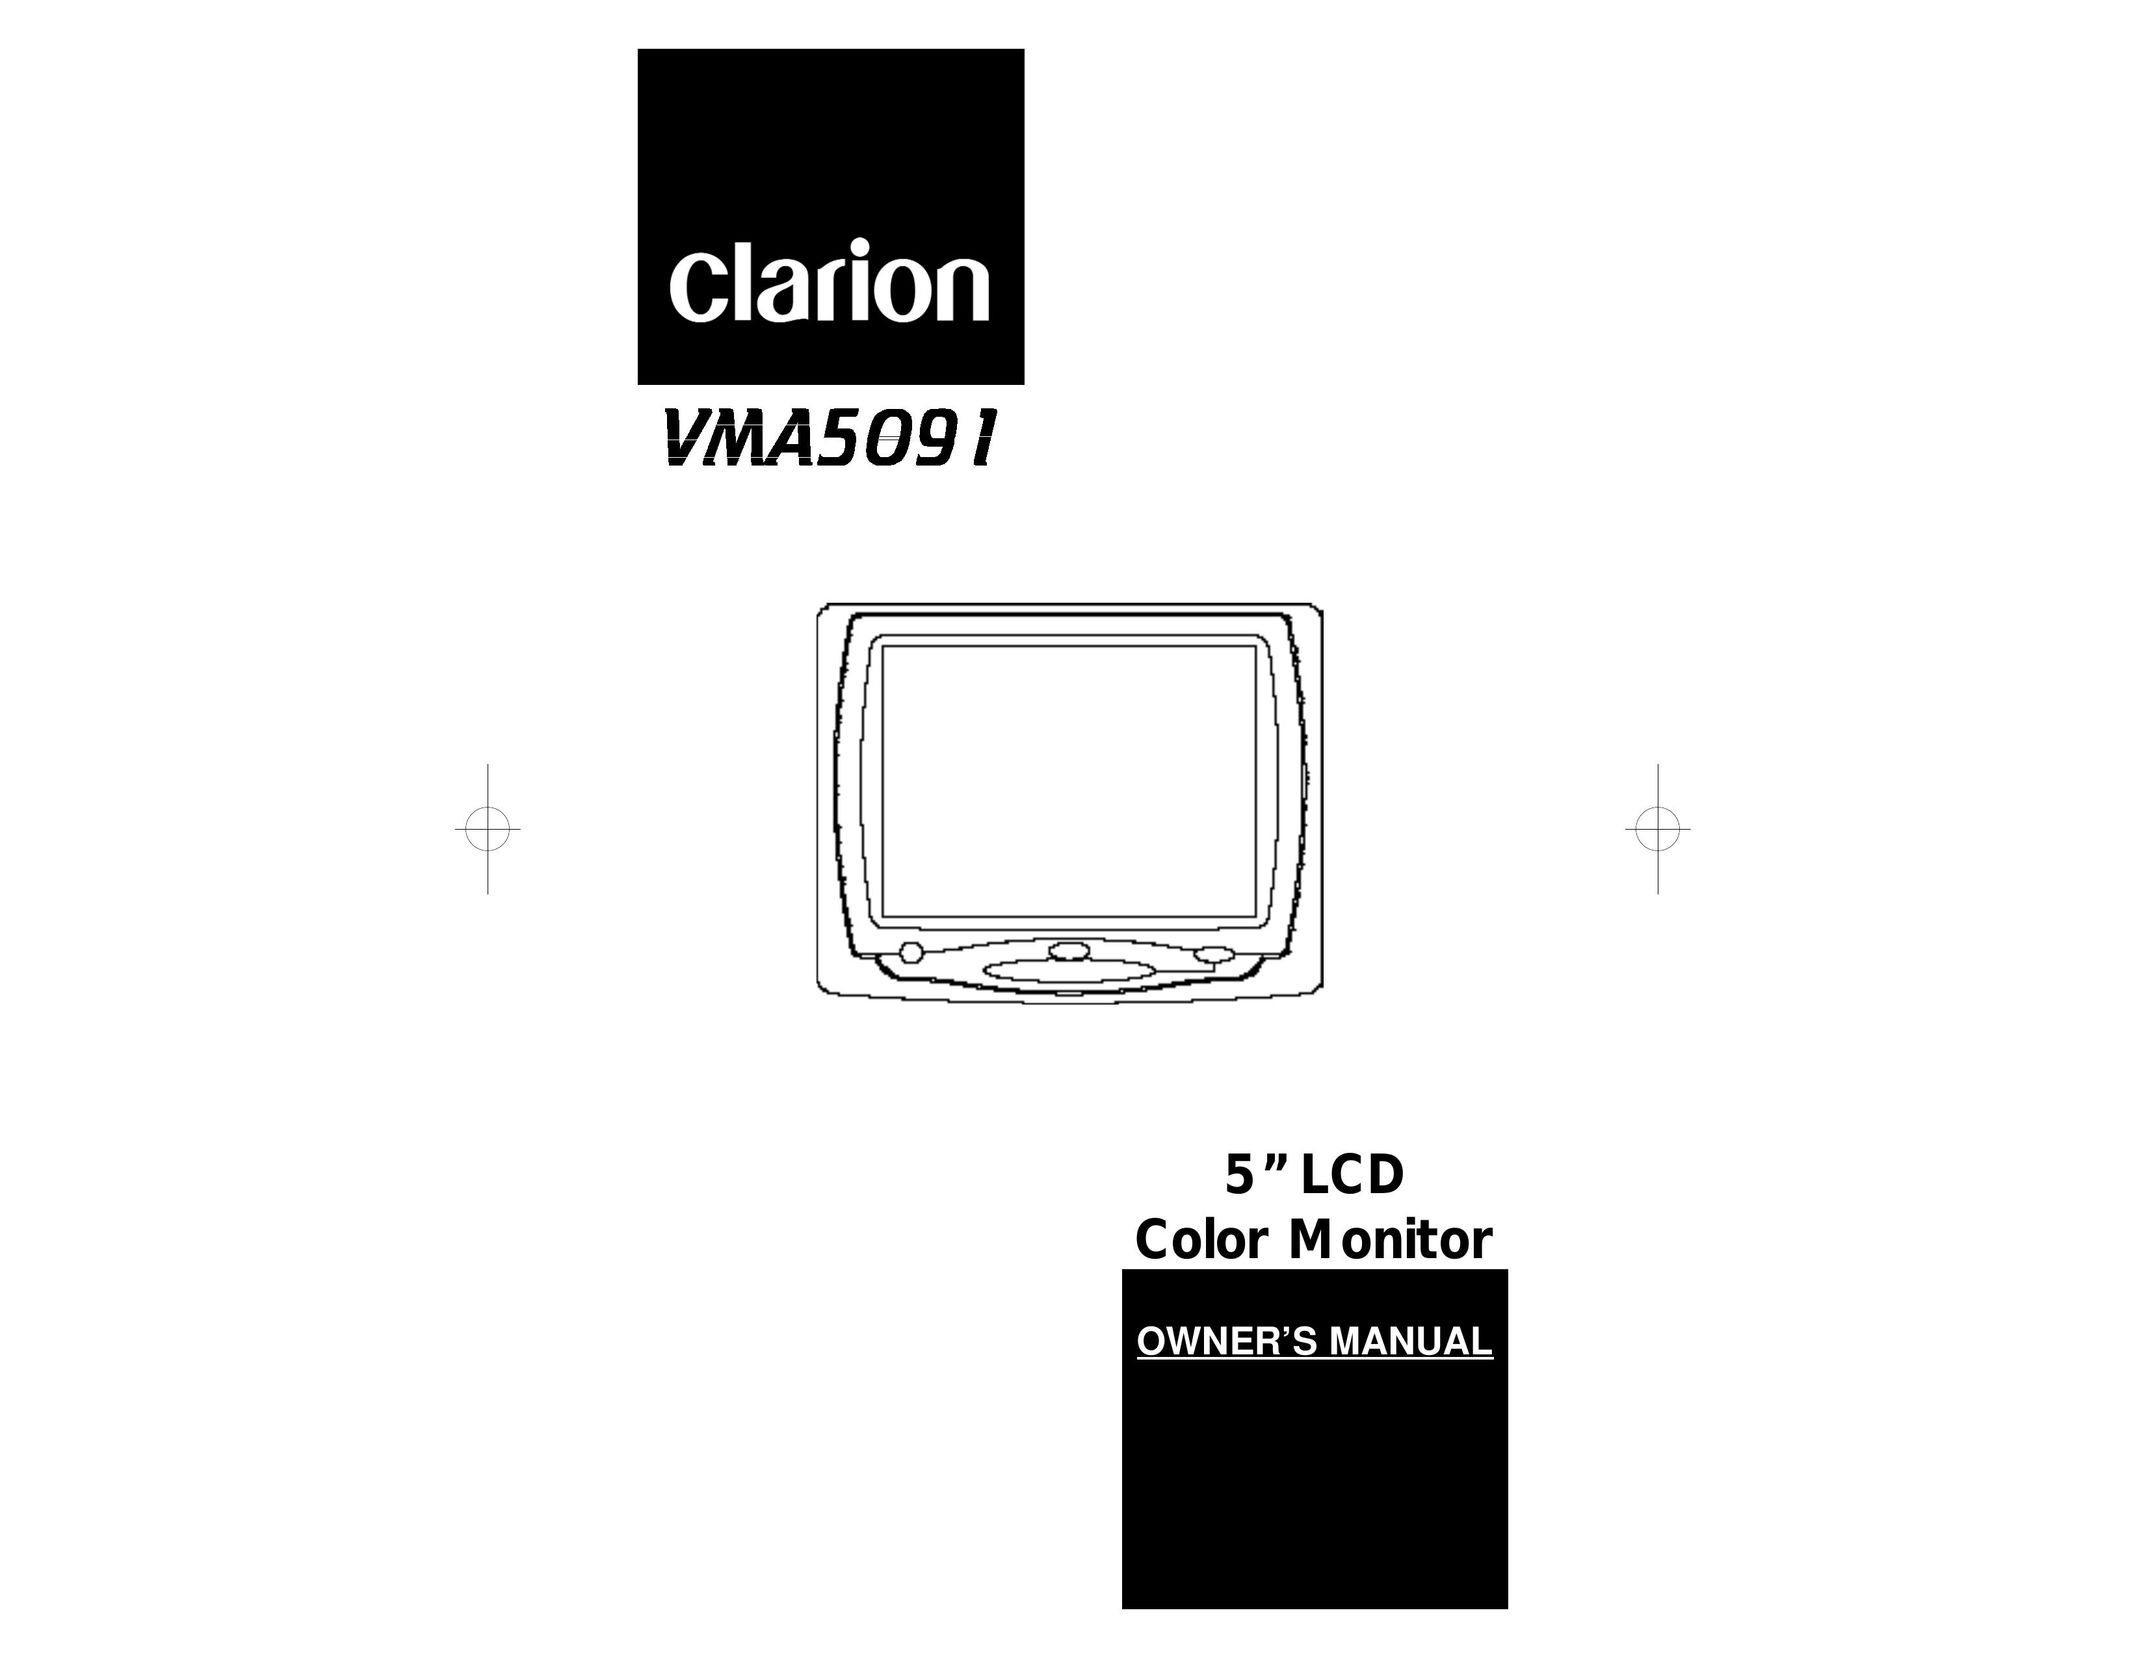 Clarion VMA5091 Computer Monitor User Manual